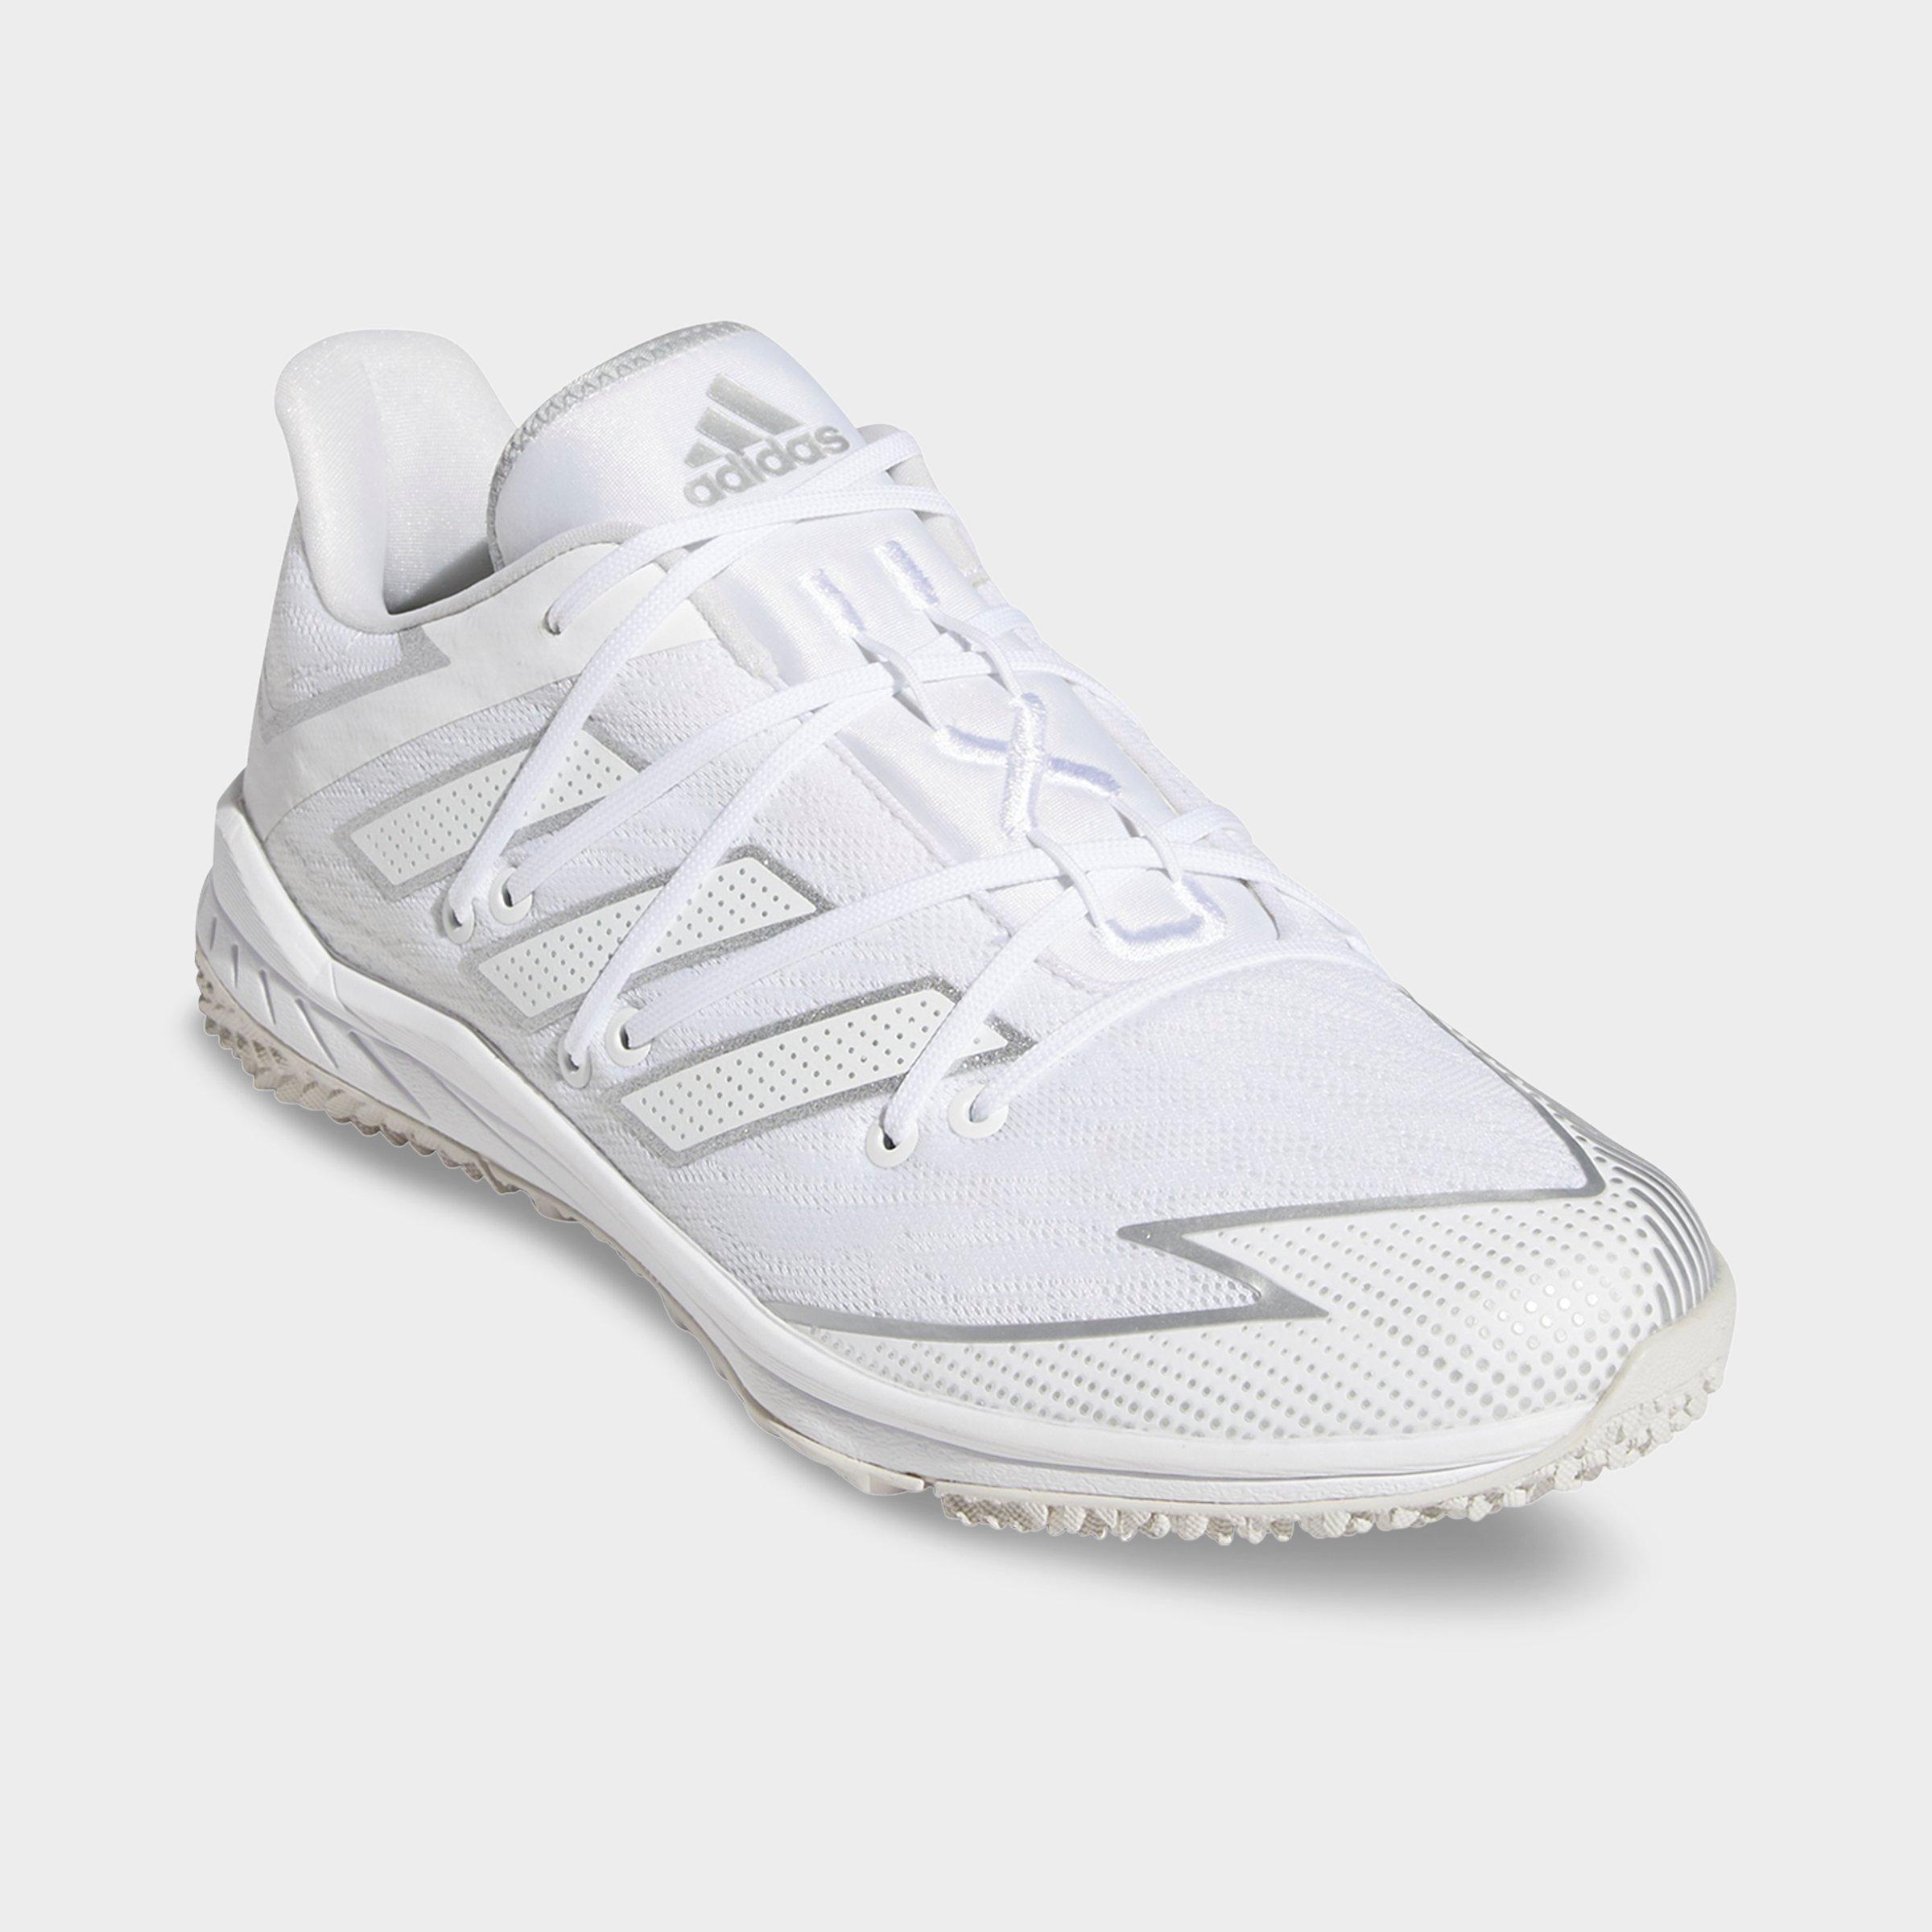 adidas baseball turf shoes